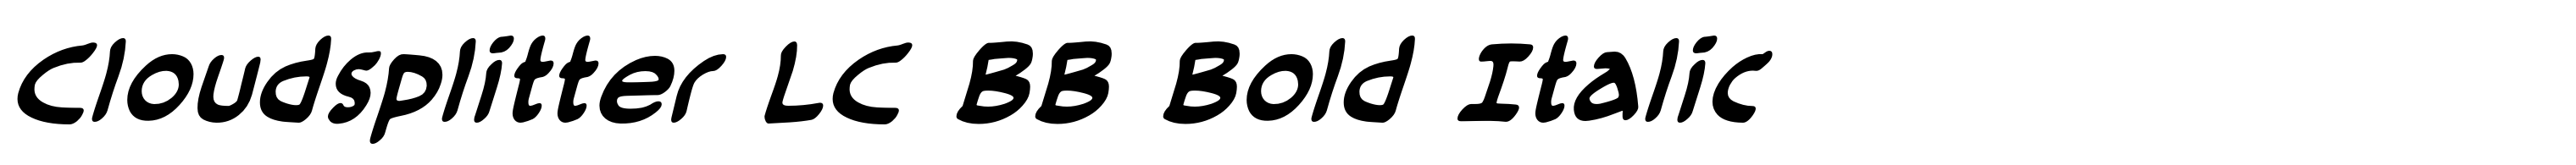 Cloudsplitter LC BB Bold Italic